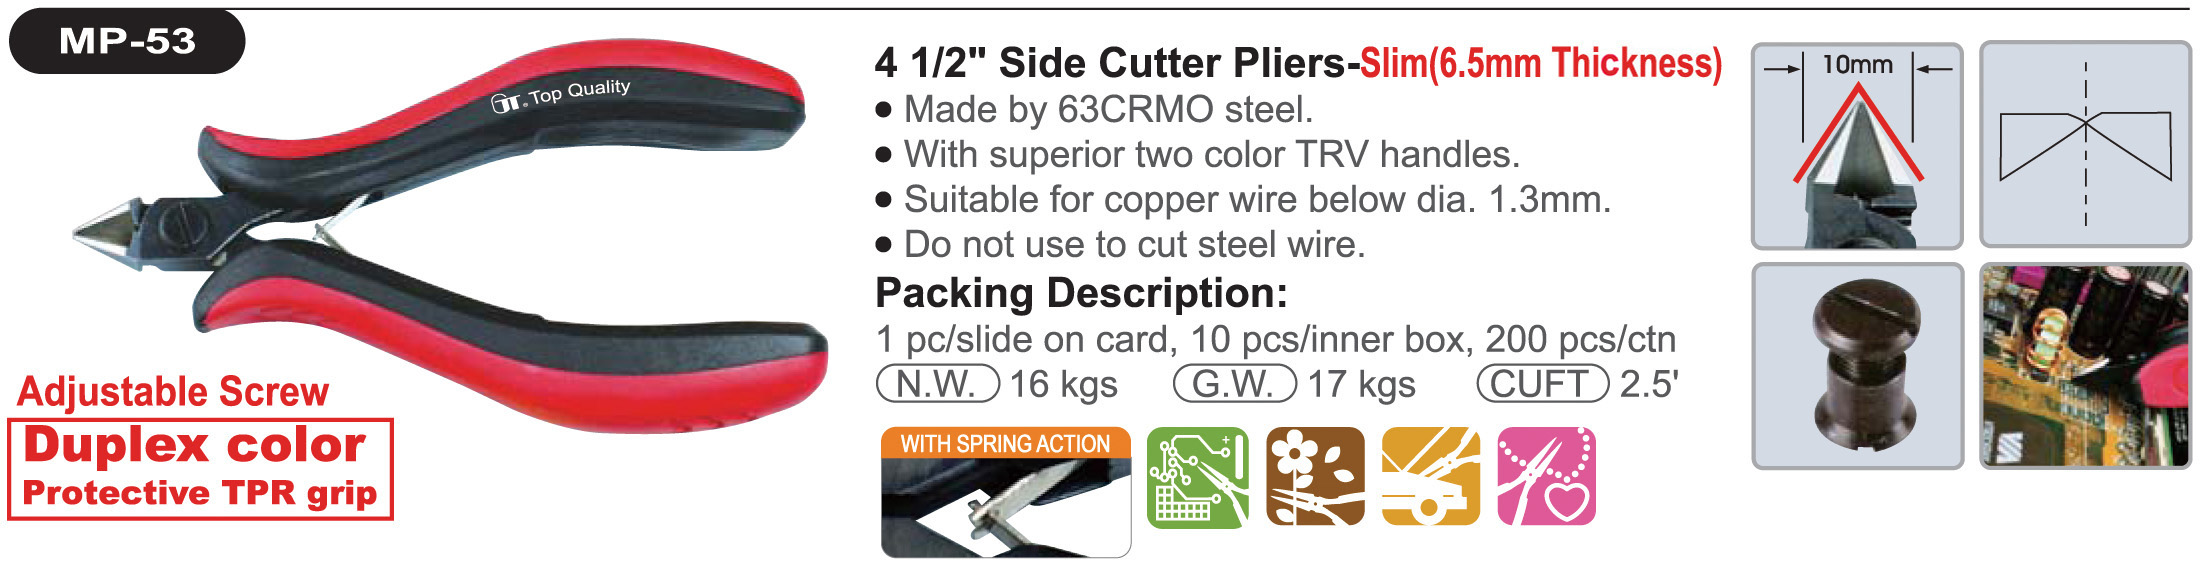 proimages/product/pliers/cutting_pliers/Precision_Electronics_Diagonal_Cutters/MP-53/MP-53.jpg